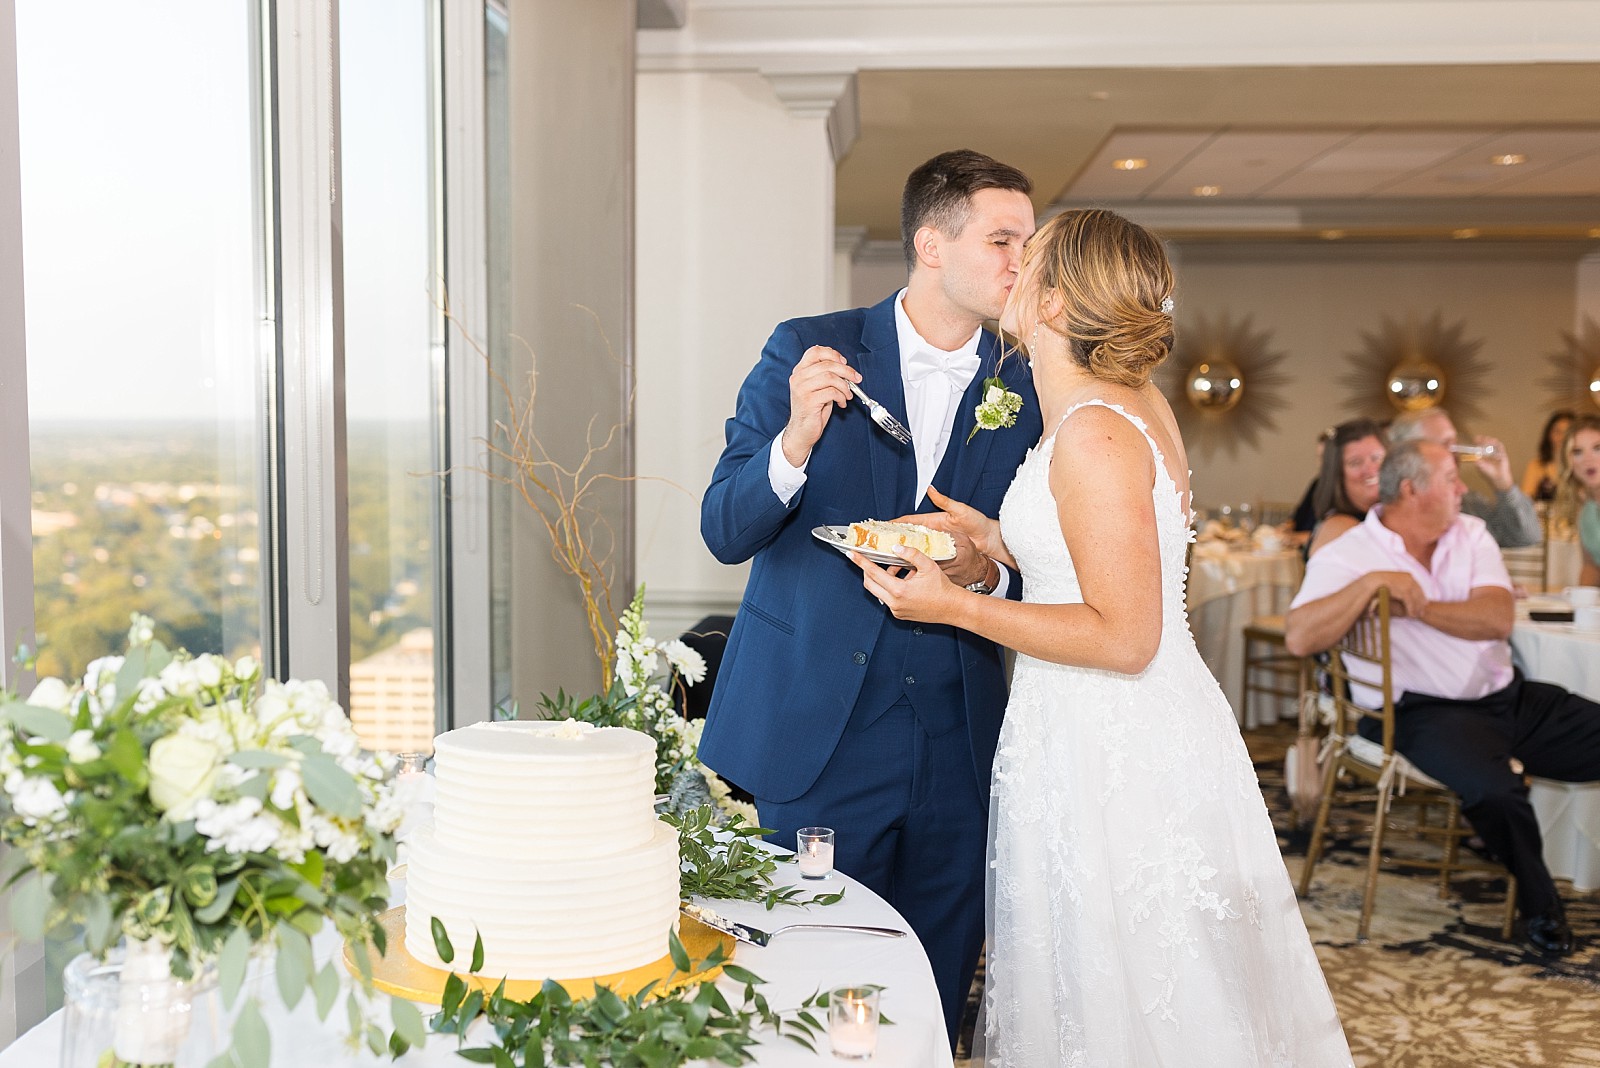 Bride and groom kissing during cake cutting | Raleigh Wedding Photographer Sarah Hinckley